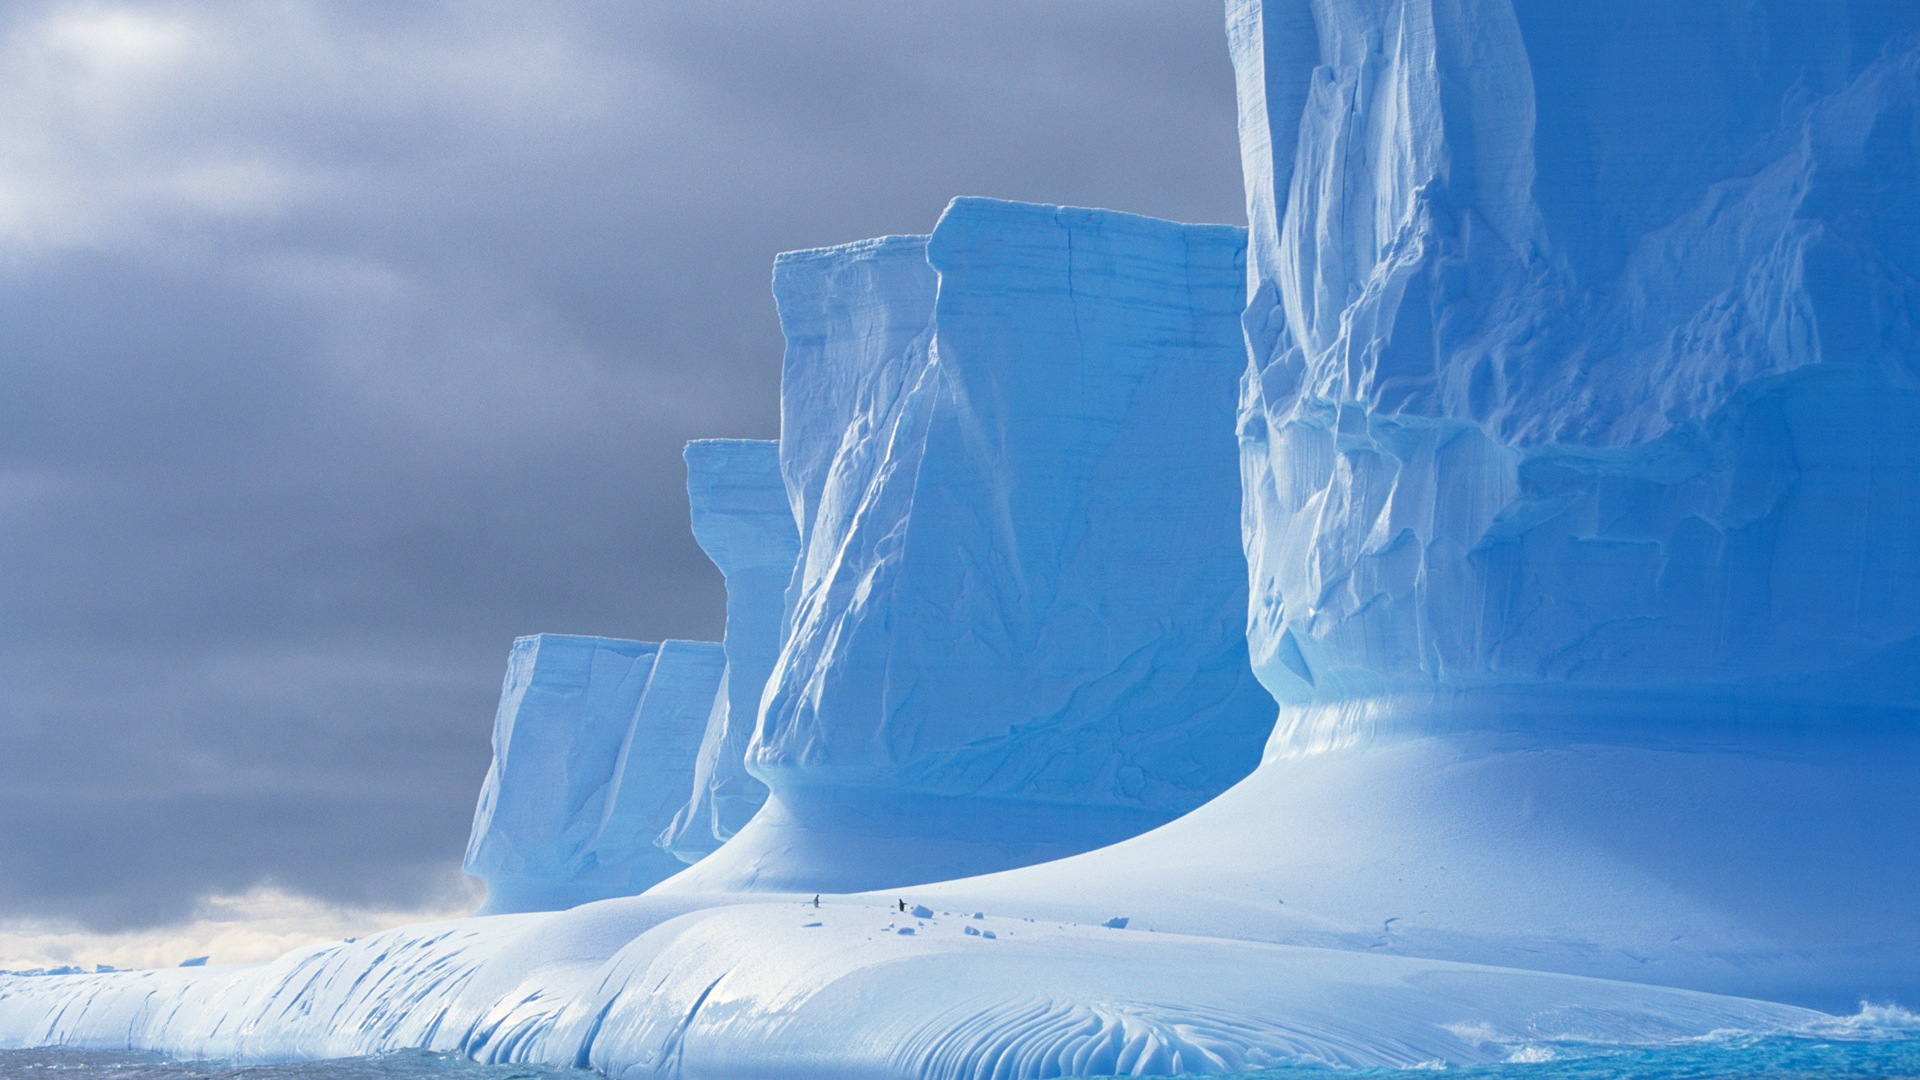 Windows 8 壁纸 南极洲 冰雪风景 南极企鹅5 19x1080 壁纸下载 Windows 8 壁纸 南极洲 冰雪风景 南极企鹅 系统 壁纸 V3壁纸站